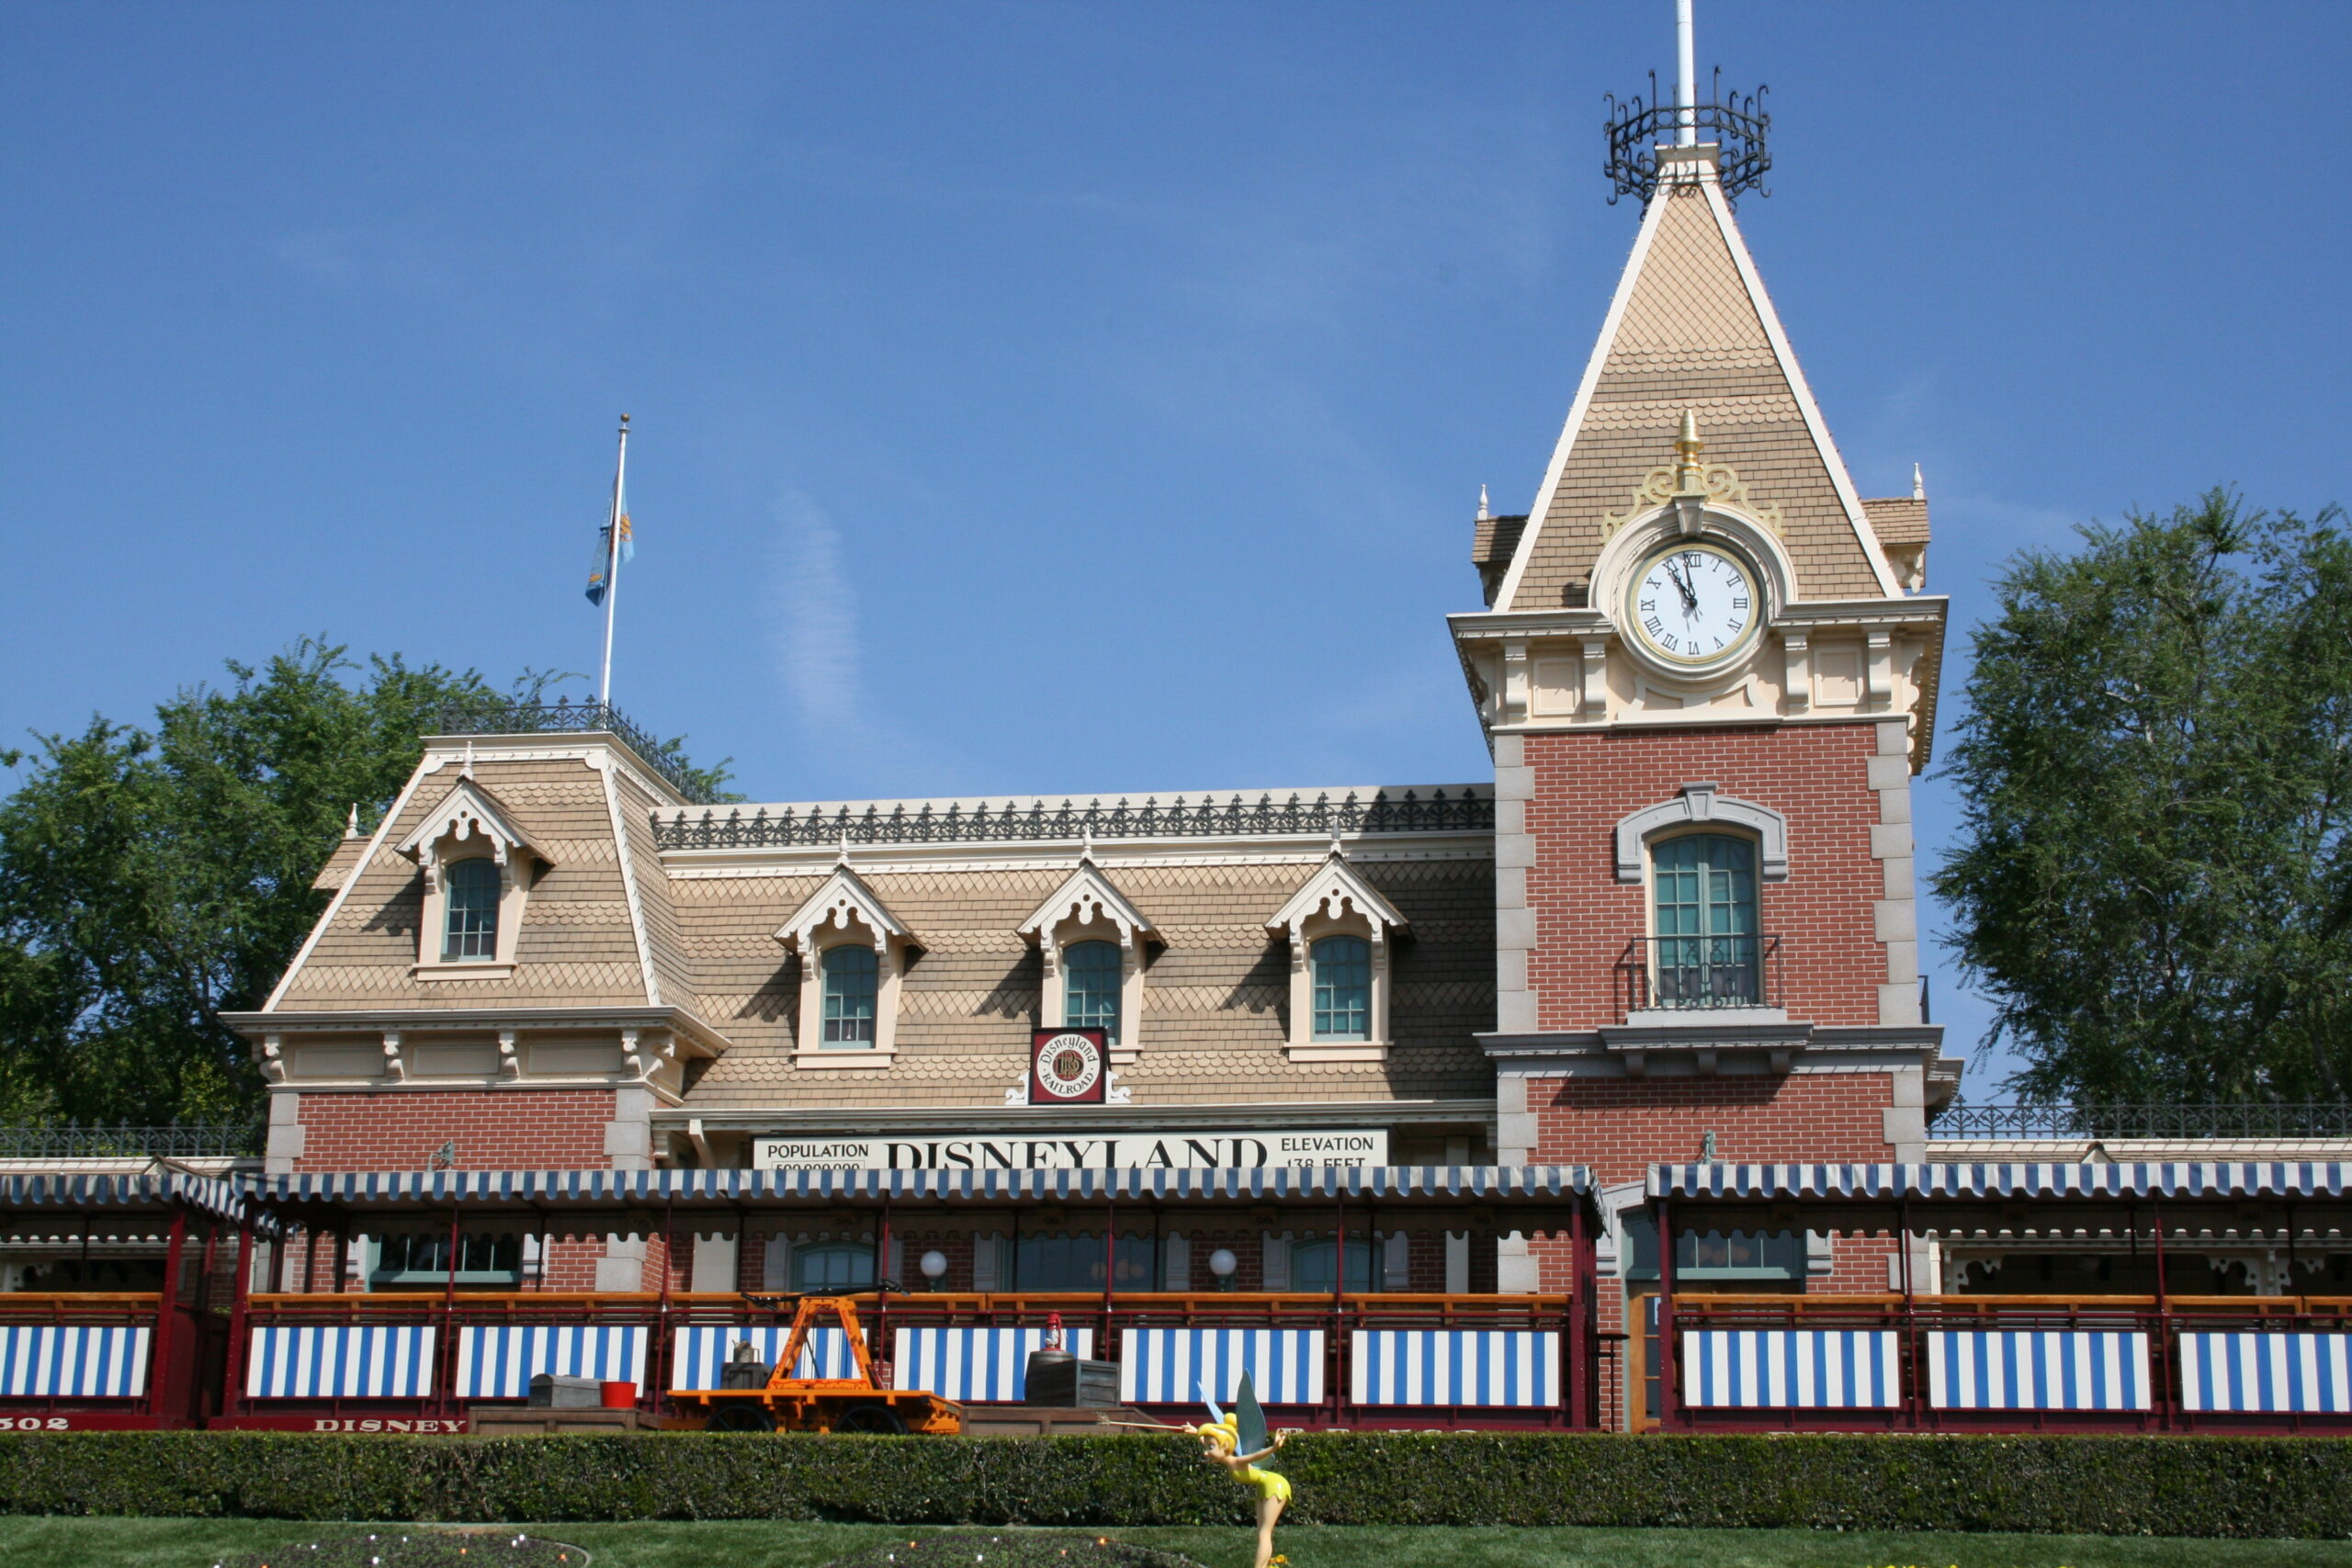 The Disneyland Railroad circumnavigates the entire Park.